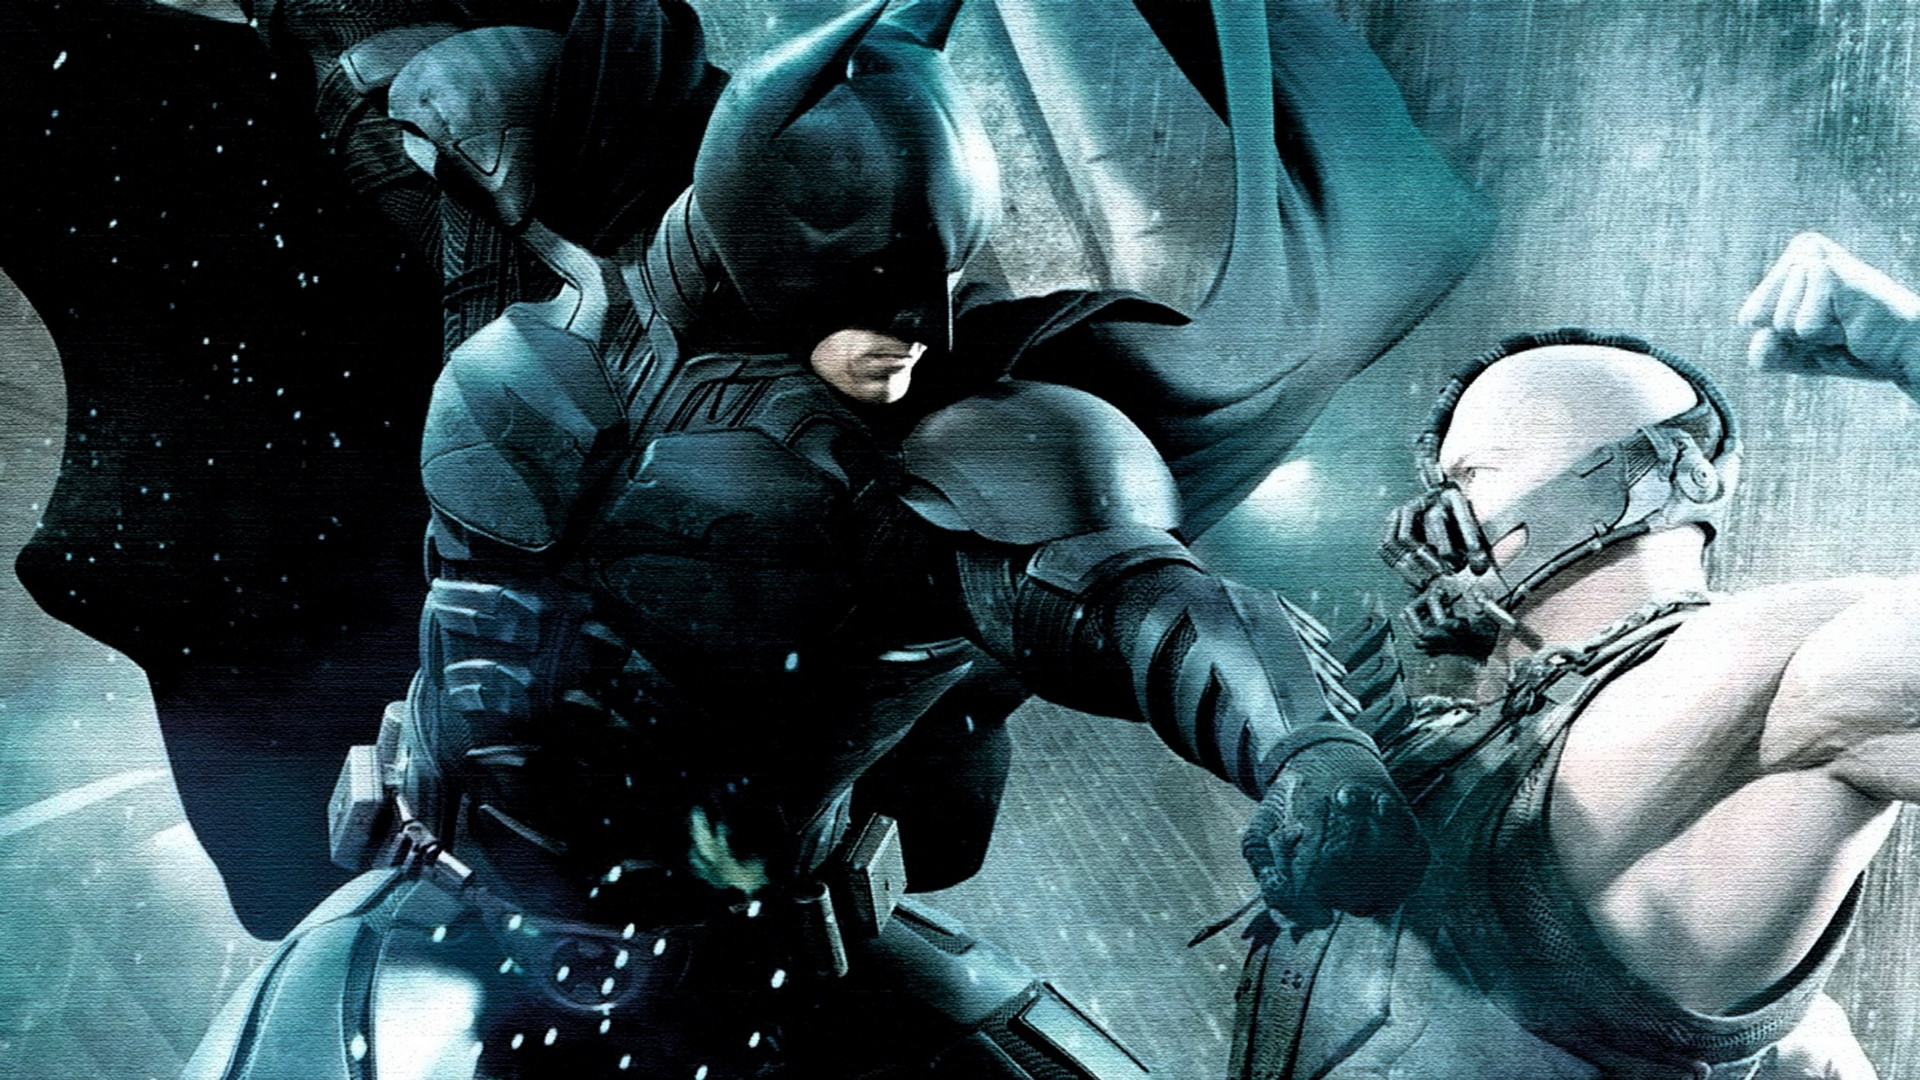 1920x1080 Batman Bane fight, The Dark Knight Rises, Bane, Christian Bale, Tom Hardy